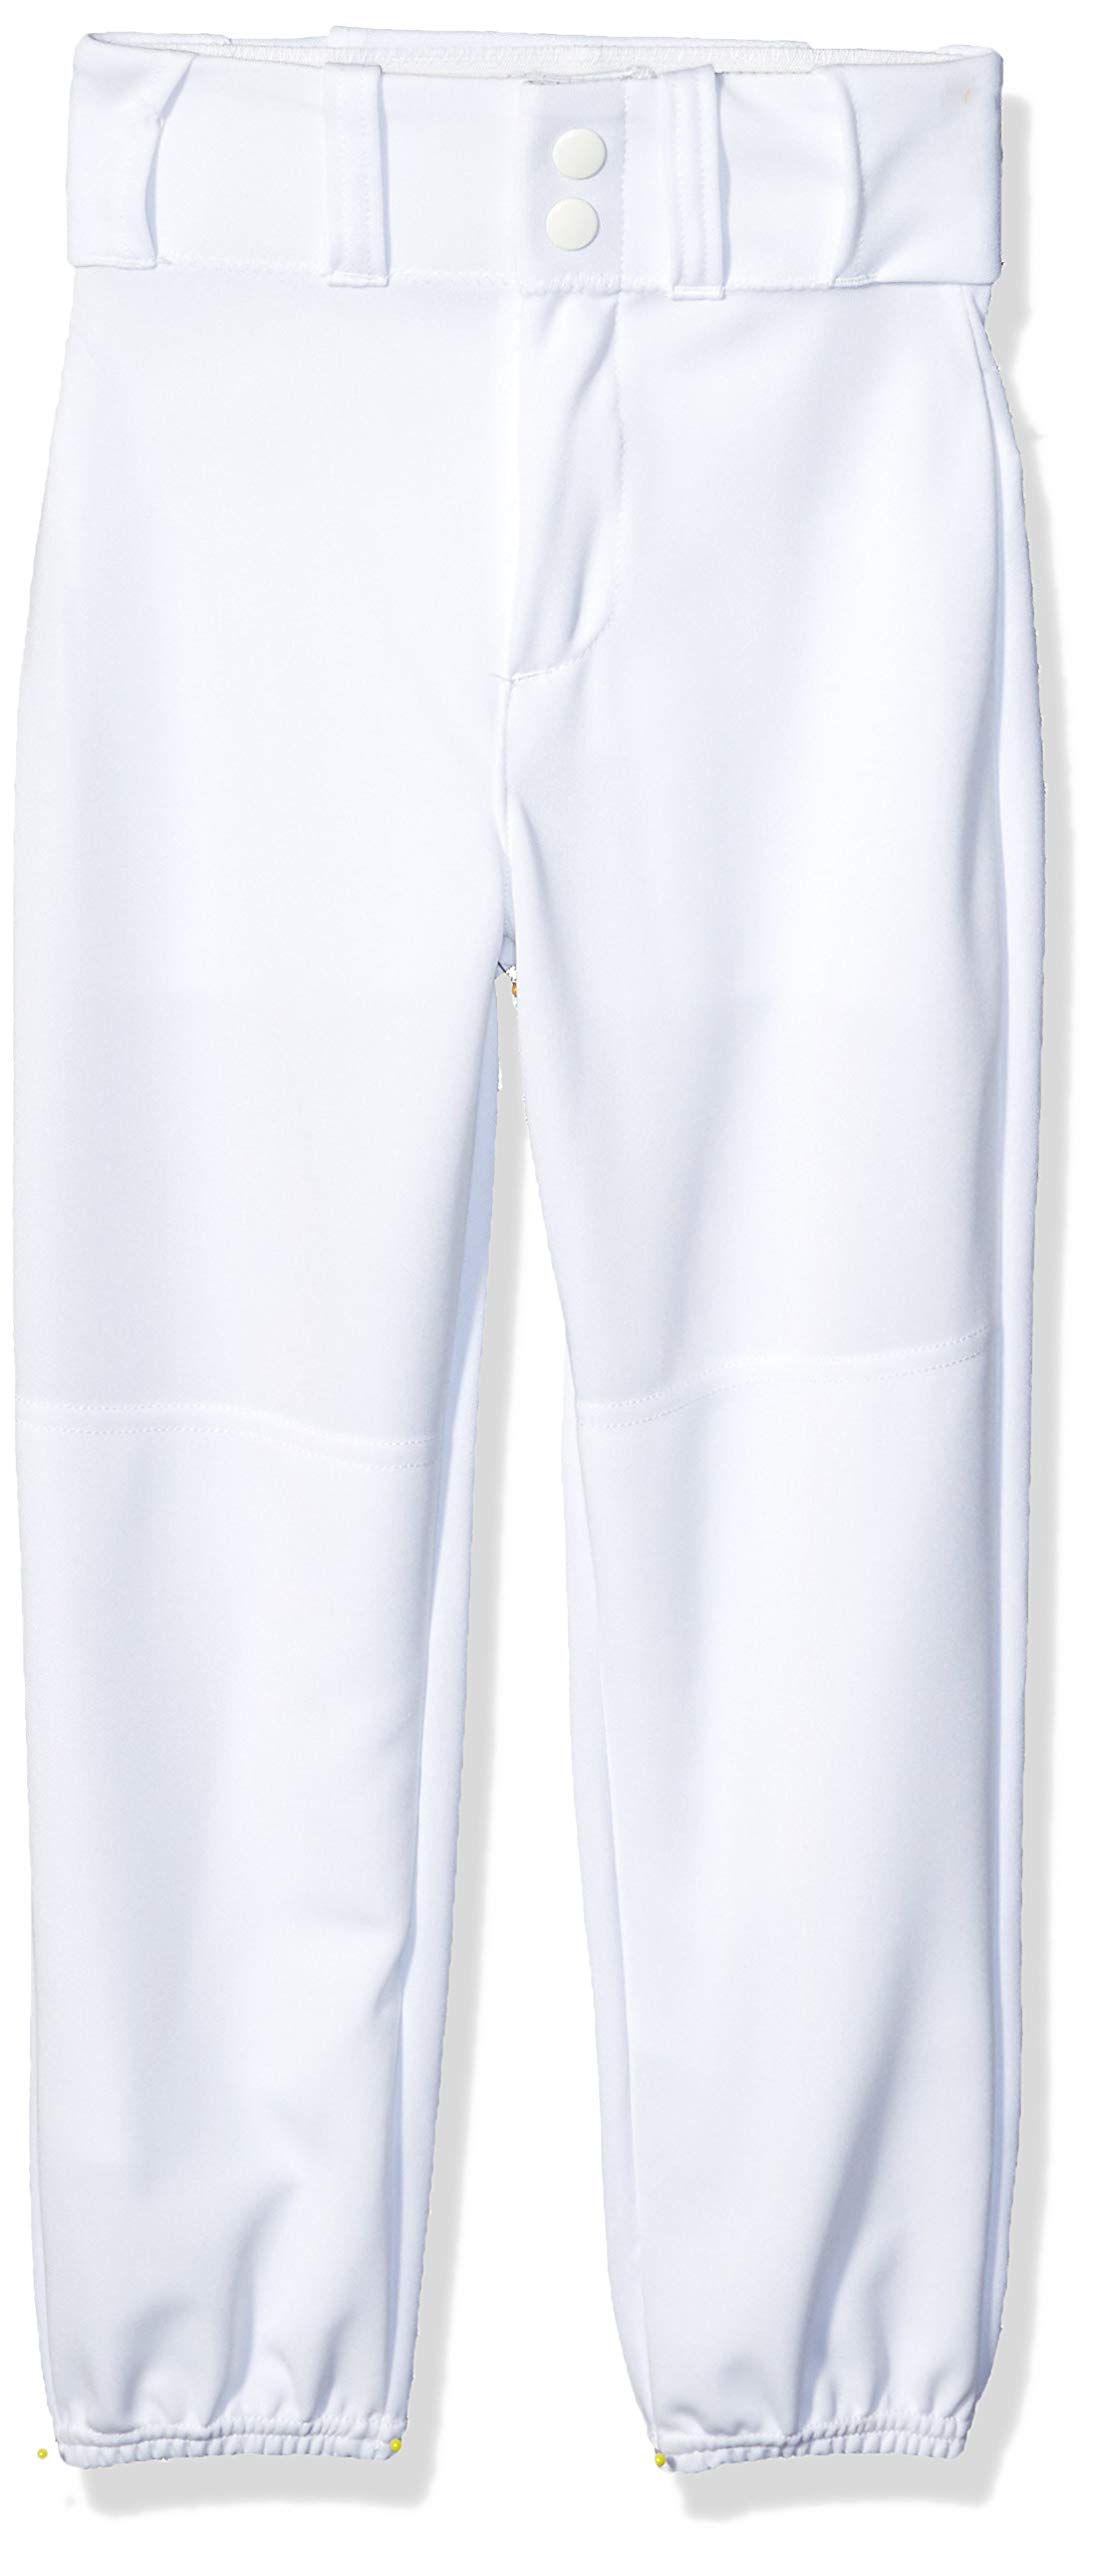 Alleson Athletic Boys Youth Elastic Bottom Baseball Pants, White, Medium